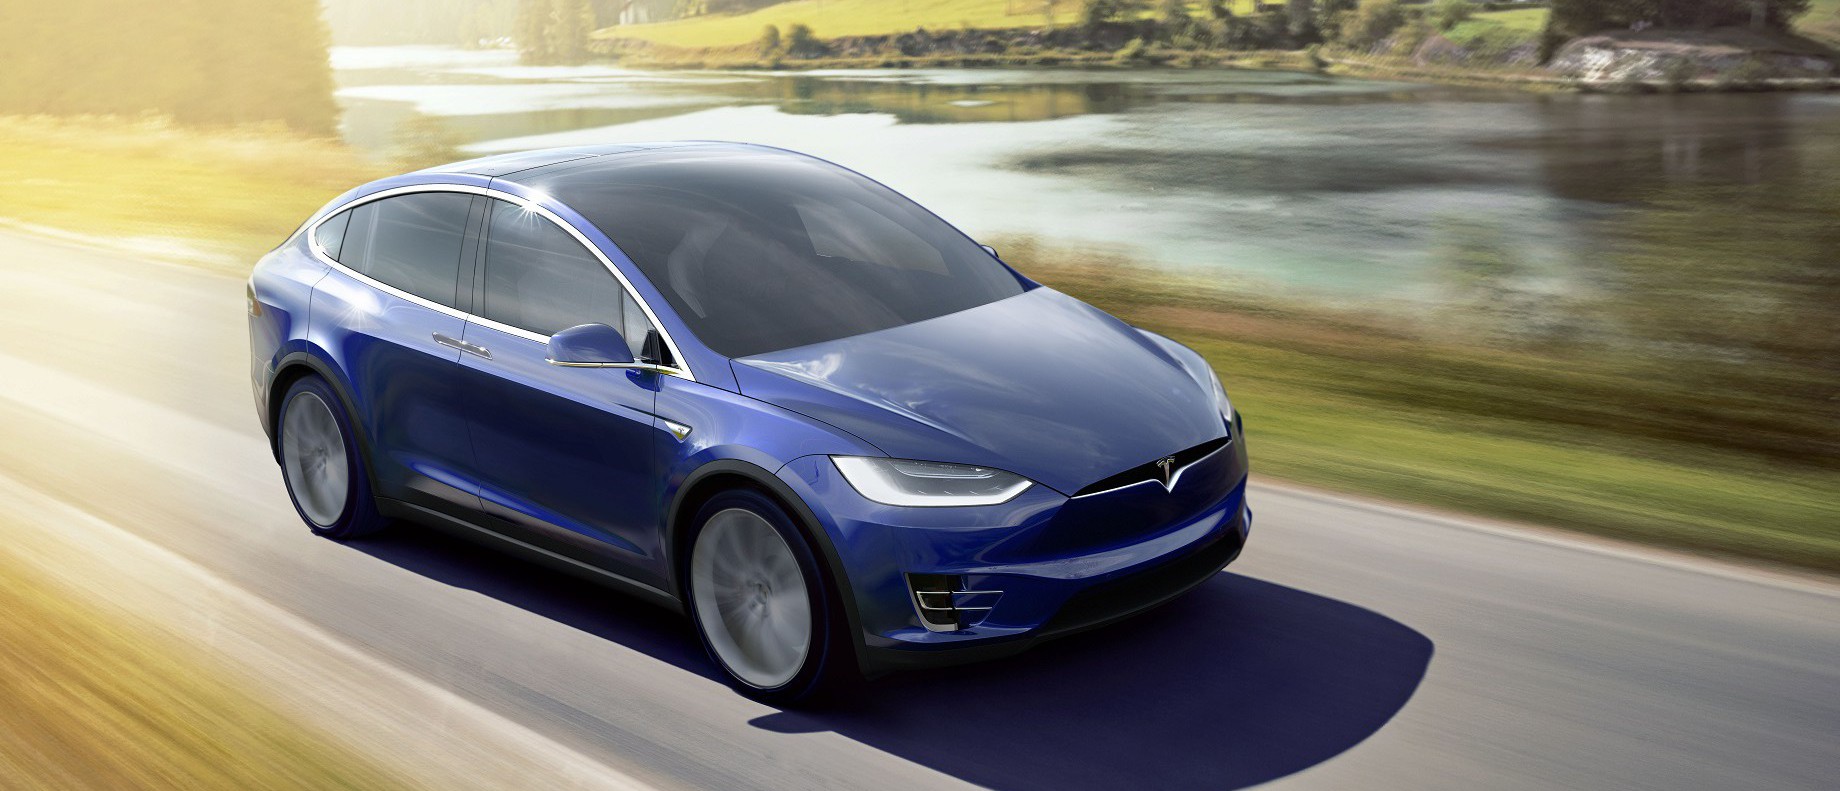 Tesla-model-x-blue-driving-2